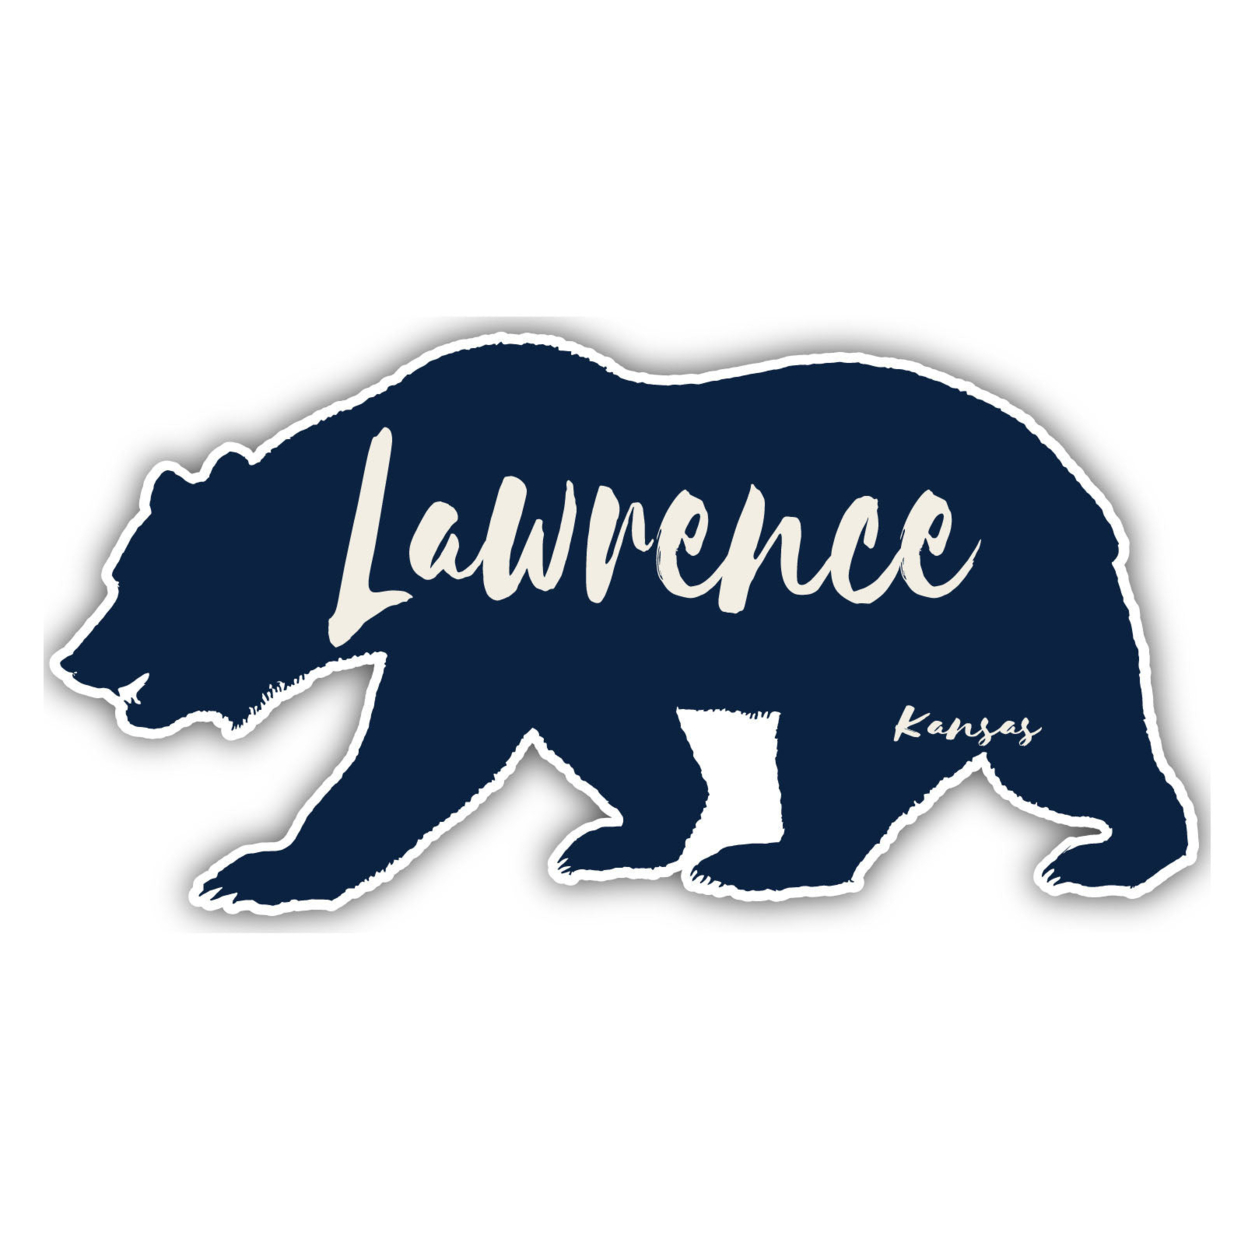 Lawrence Kansas Souvenir Decorative Stickers (Choose Theme And Size) - 4-Inch, Tent